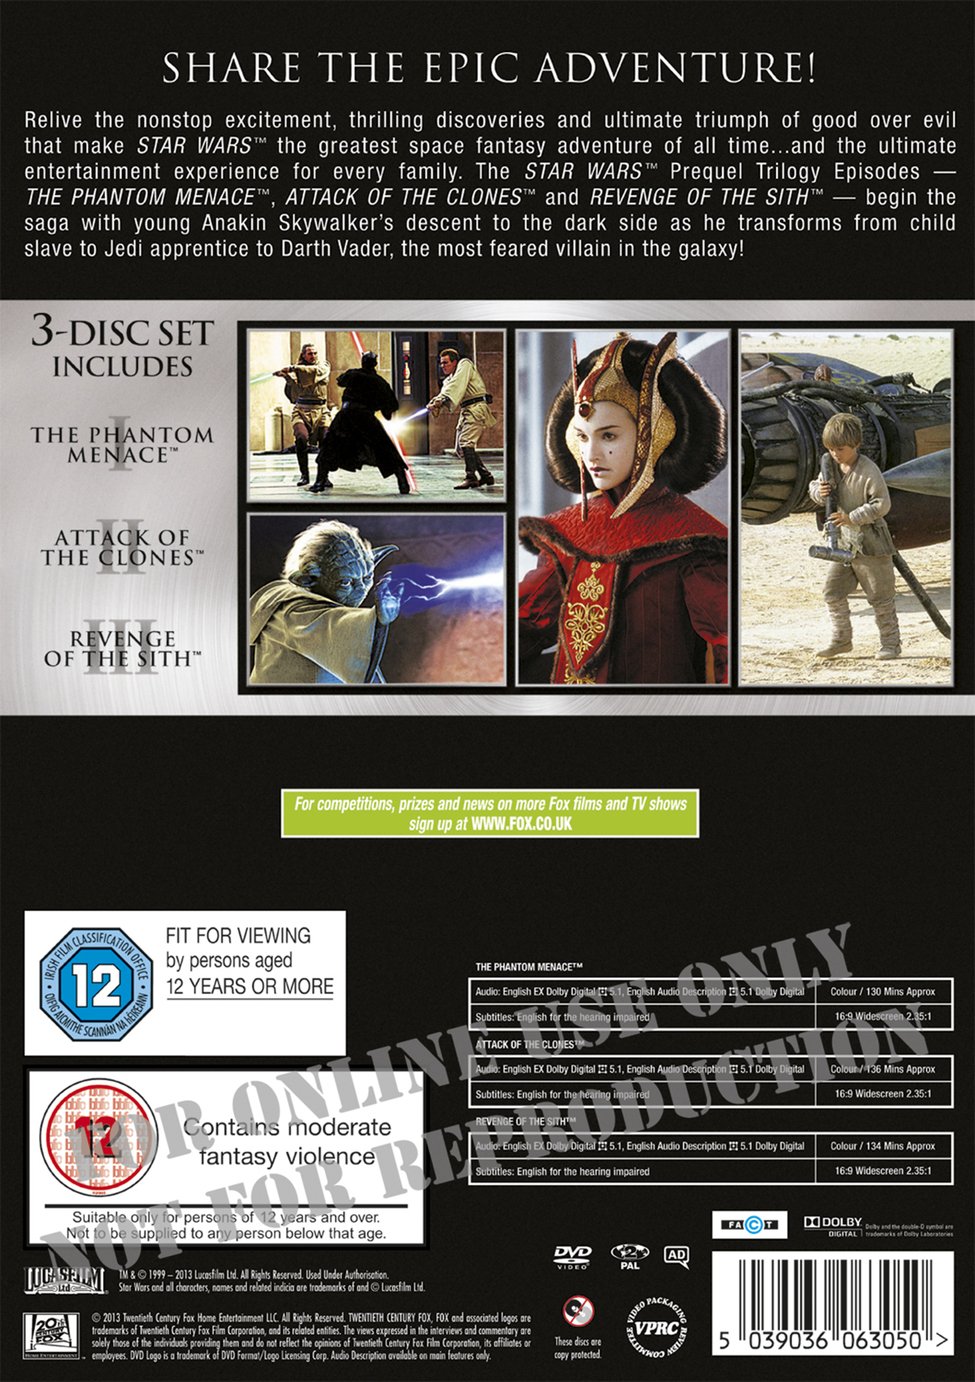 Star Wars: The Prequel Trilogy DVD Box Set Review